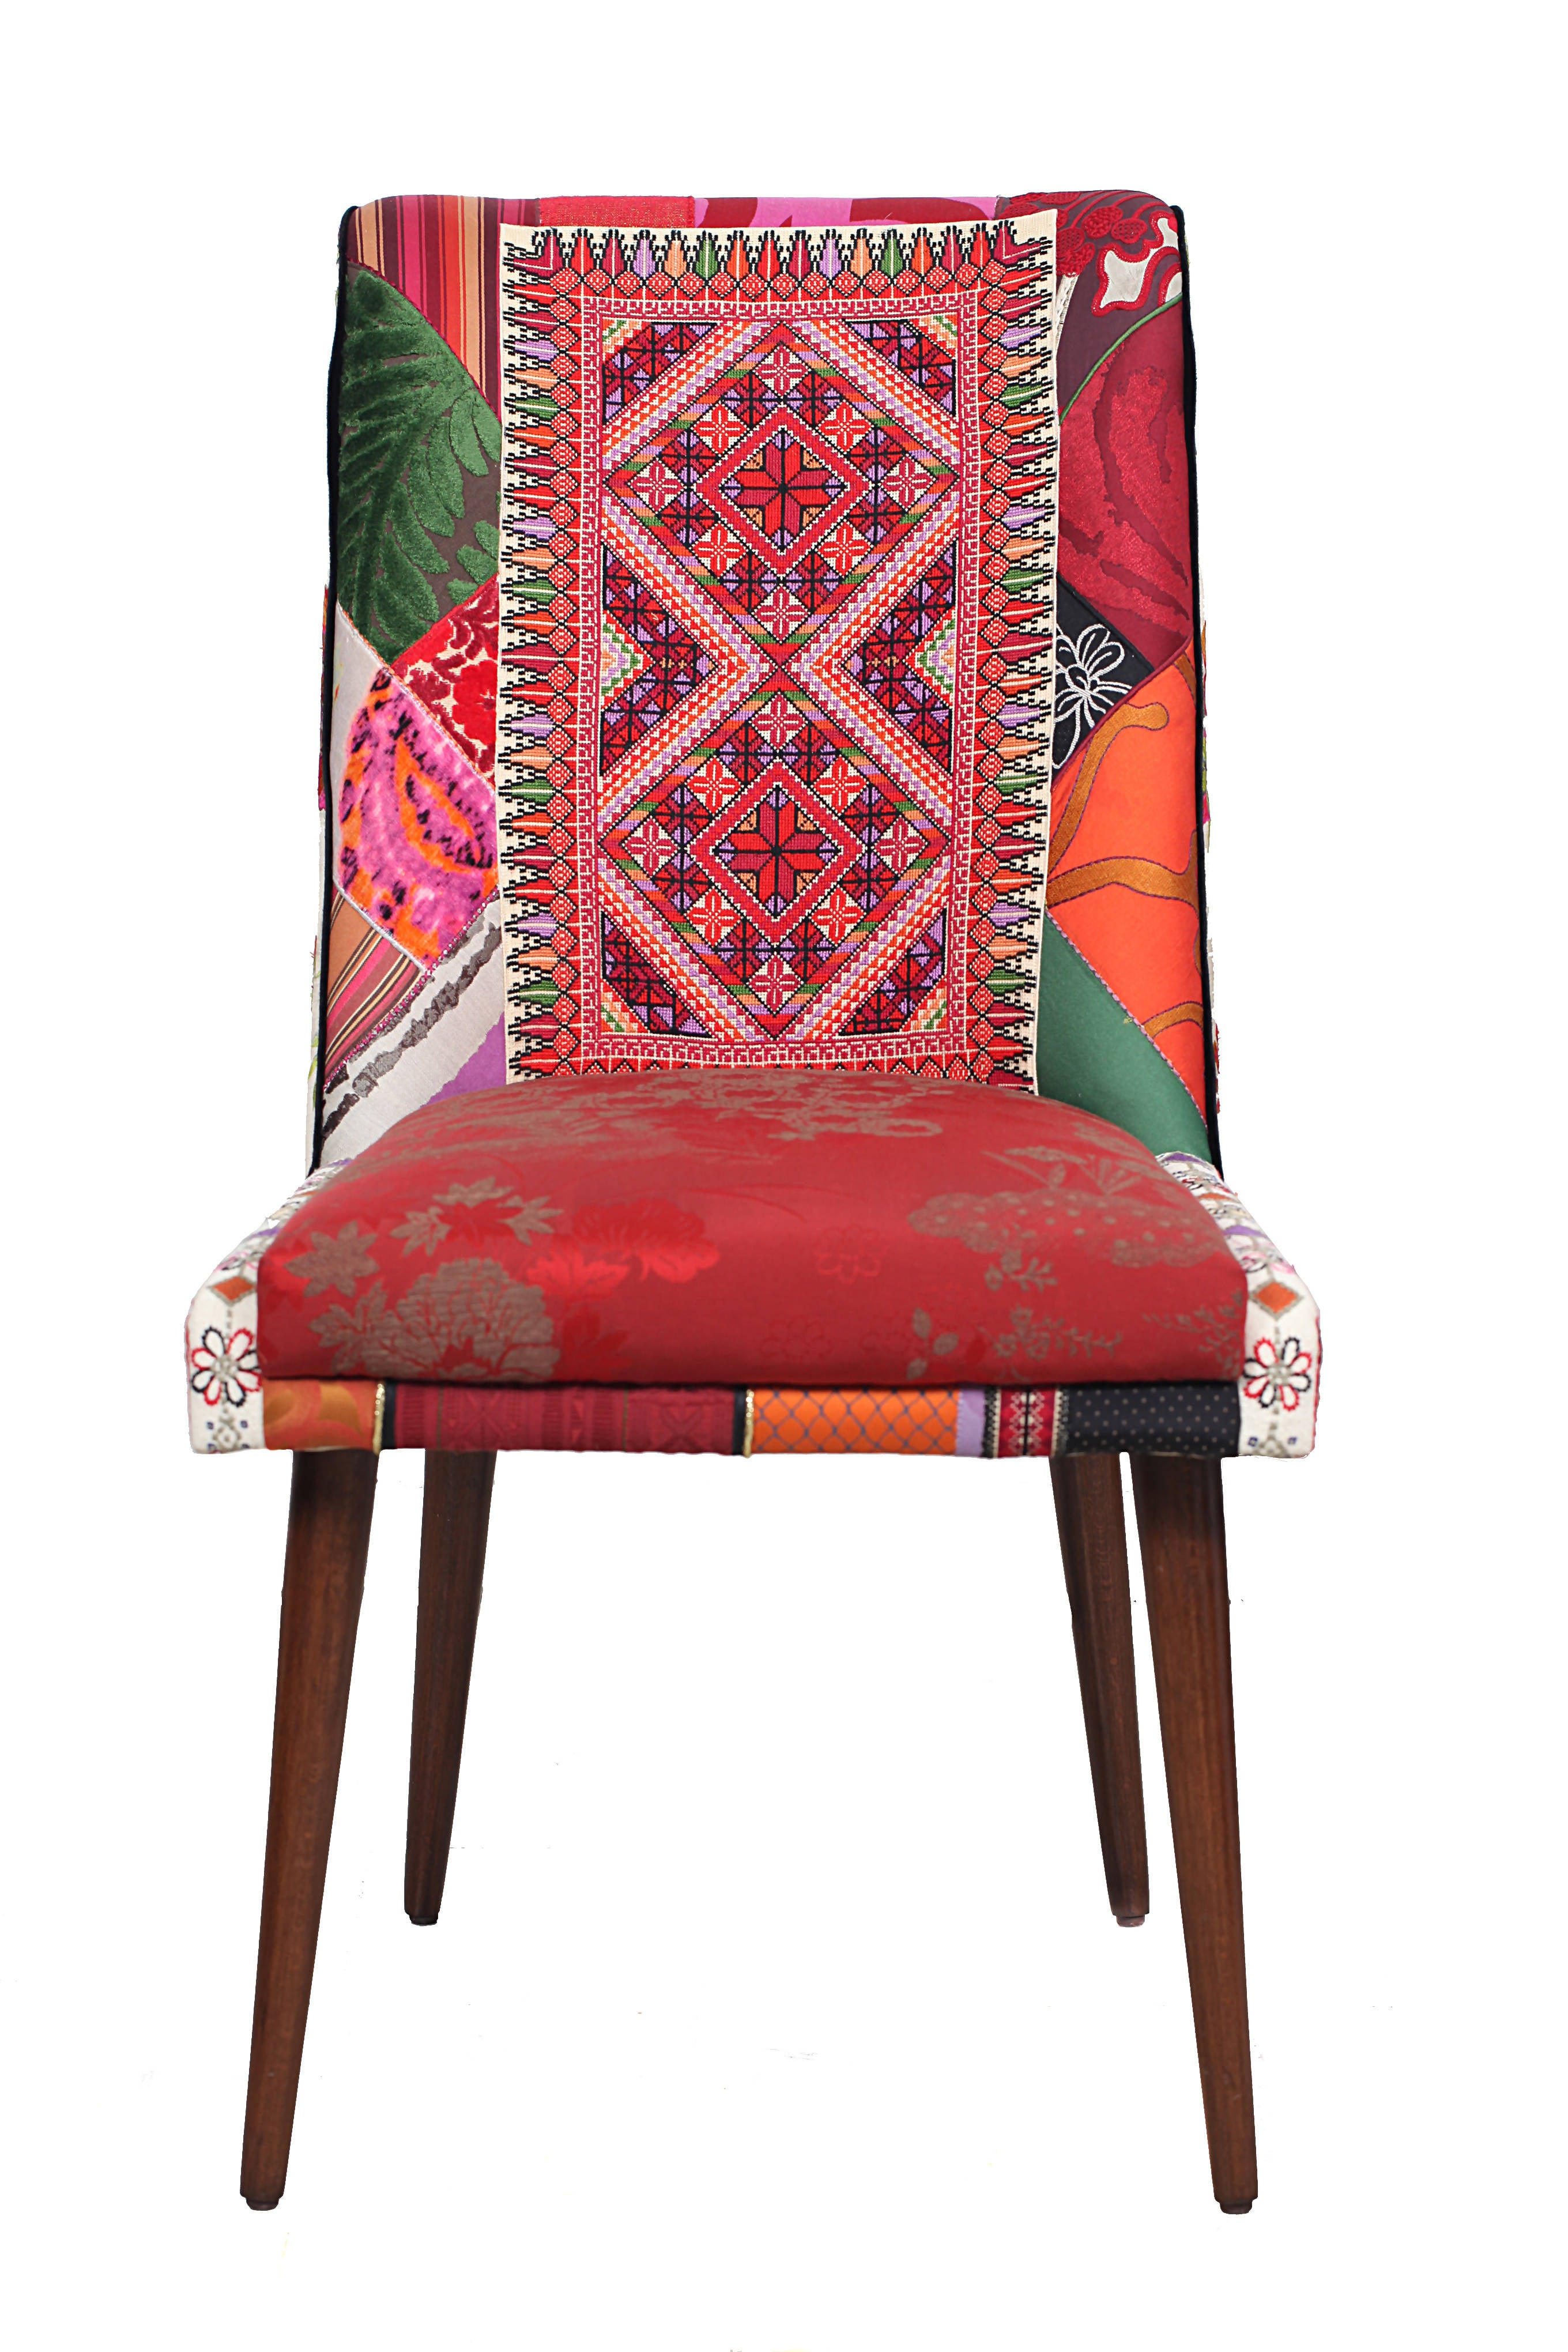 Palestinian Chair